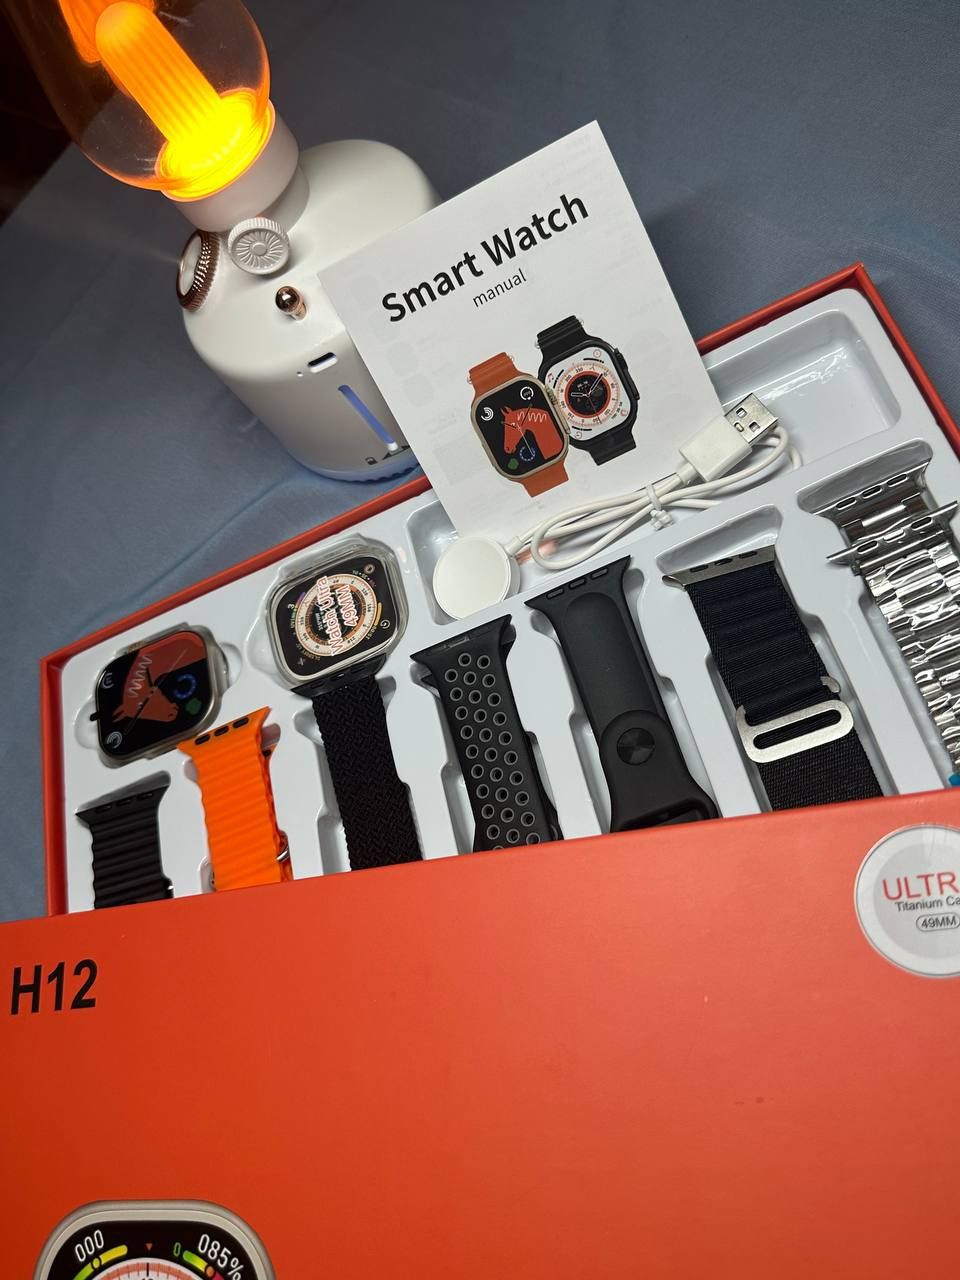 H12 smart watch sotuvda